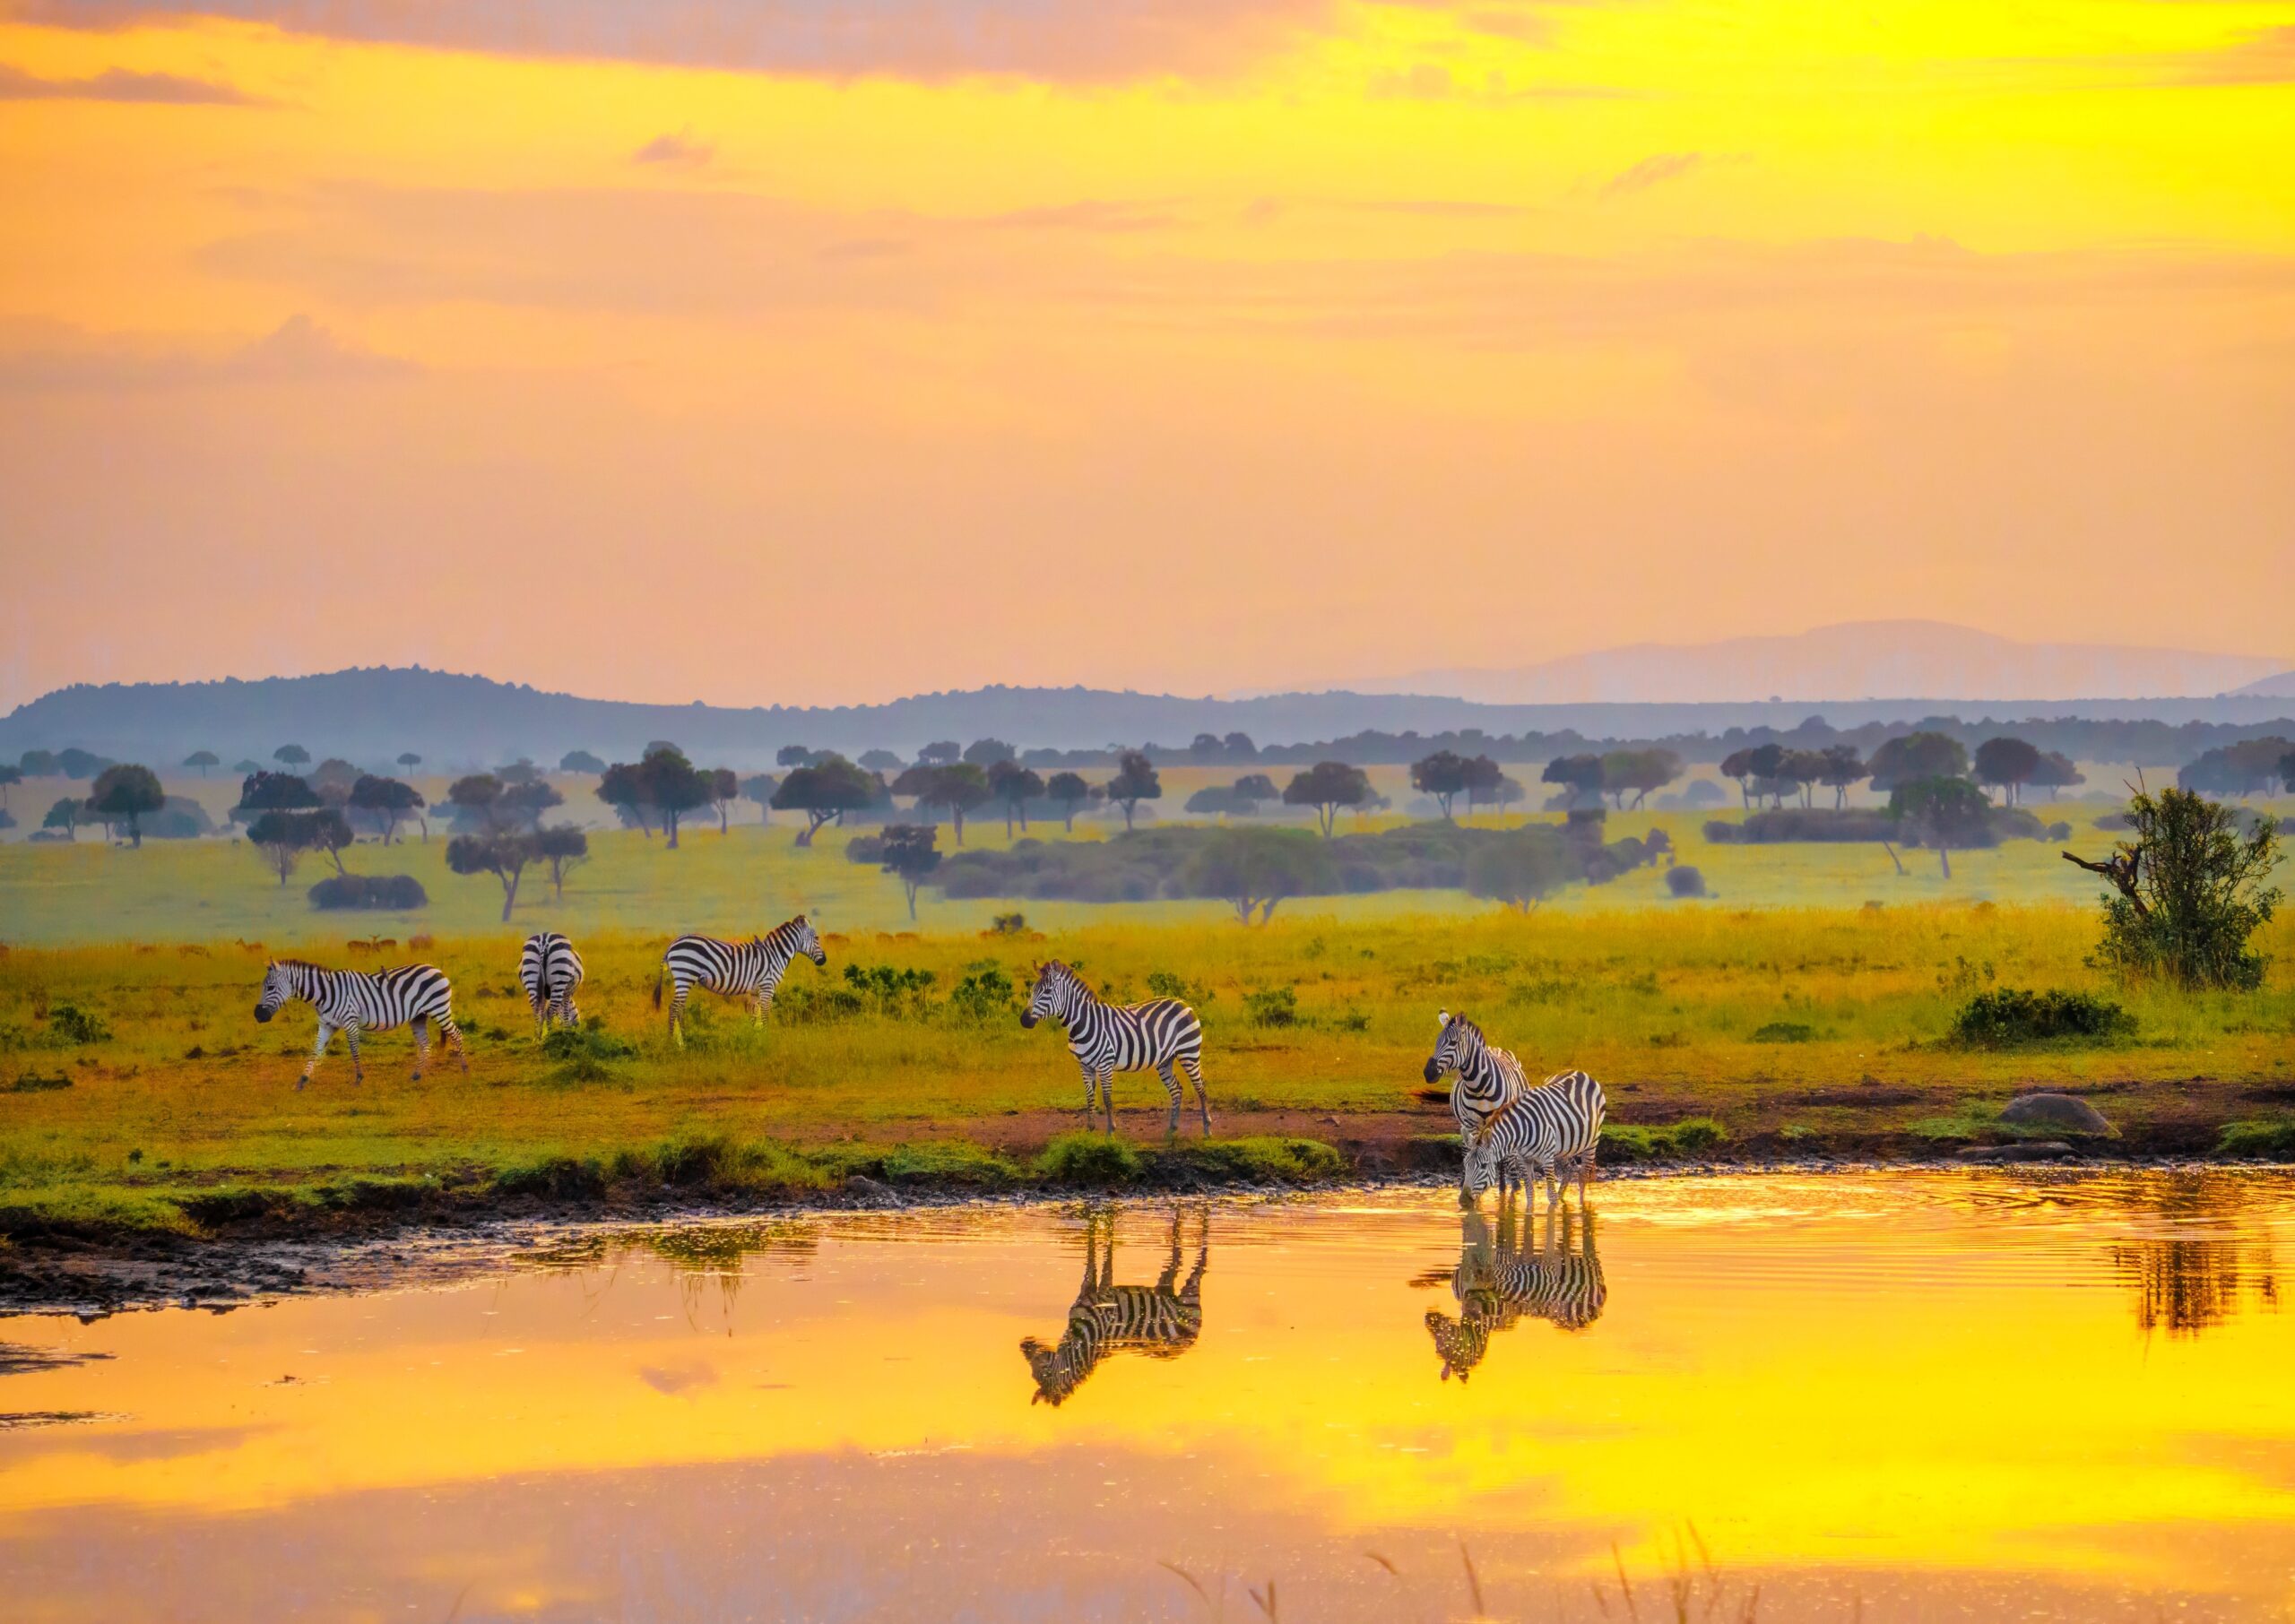 <img src="zebras.jpg" alt="zebras at masai mara national park"/>